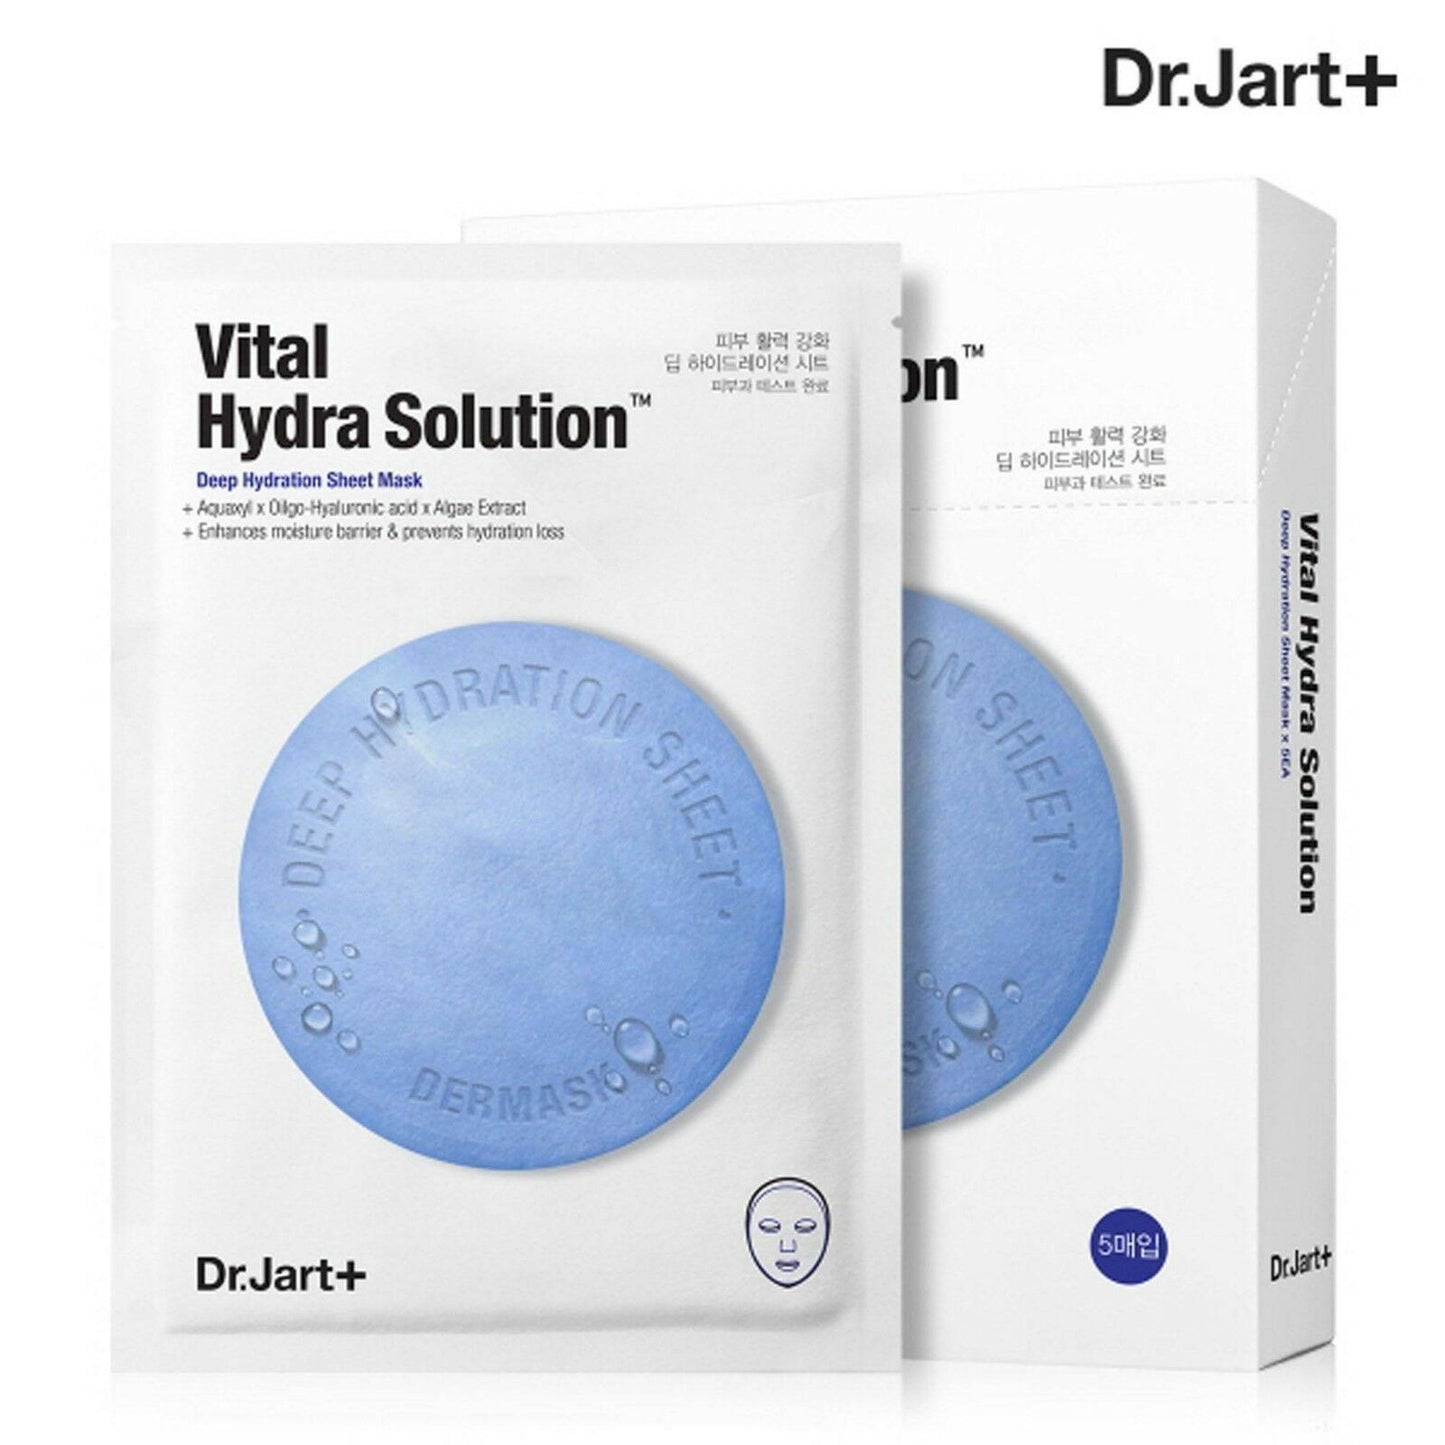 Dr. Jart+ The Dermask Water Jet Vital Hydra Solution™ 25g x 5 sheets